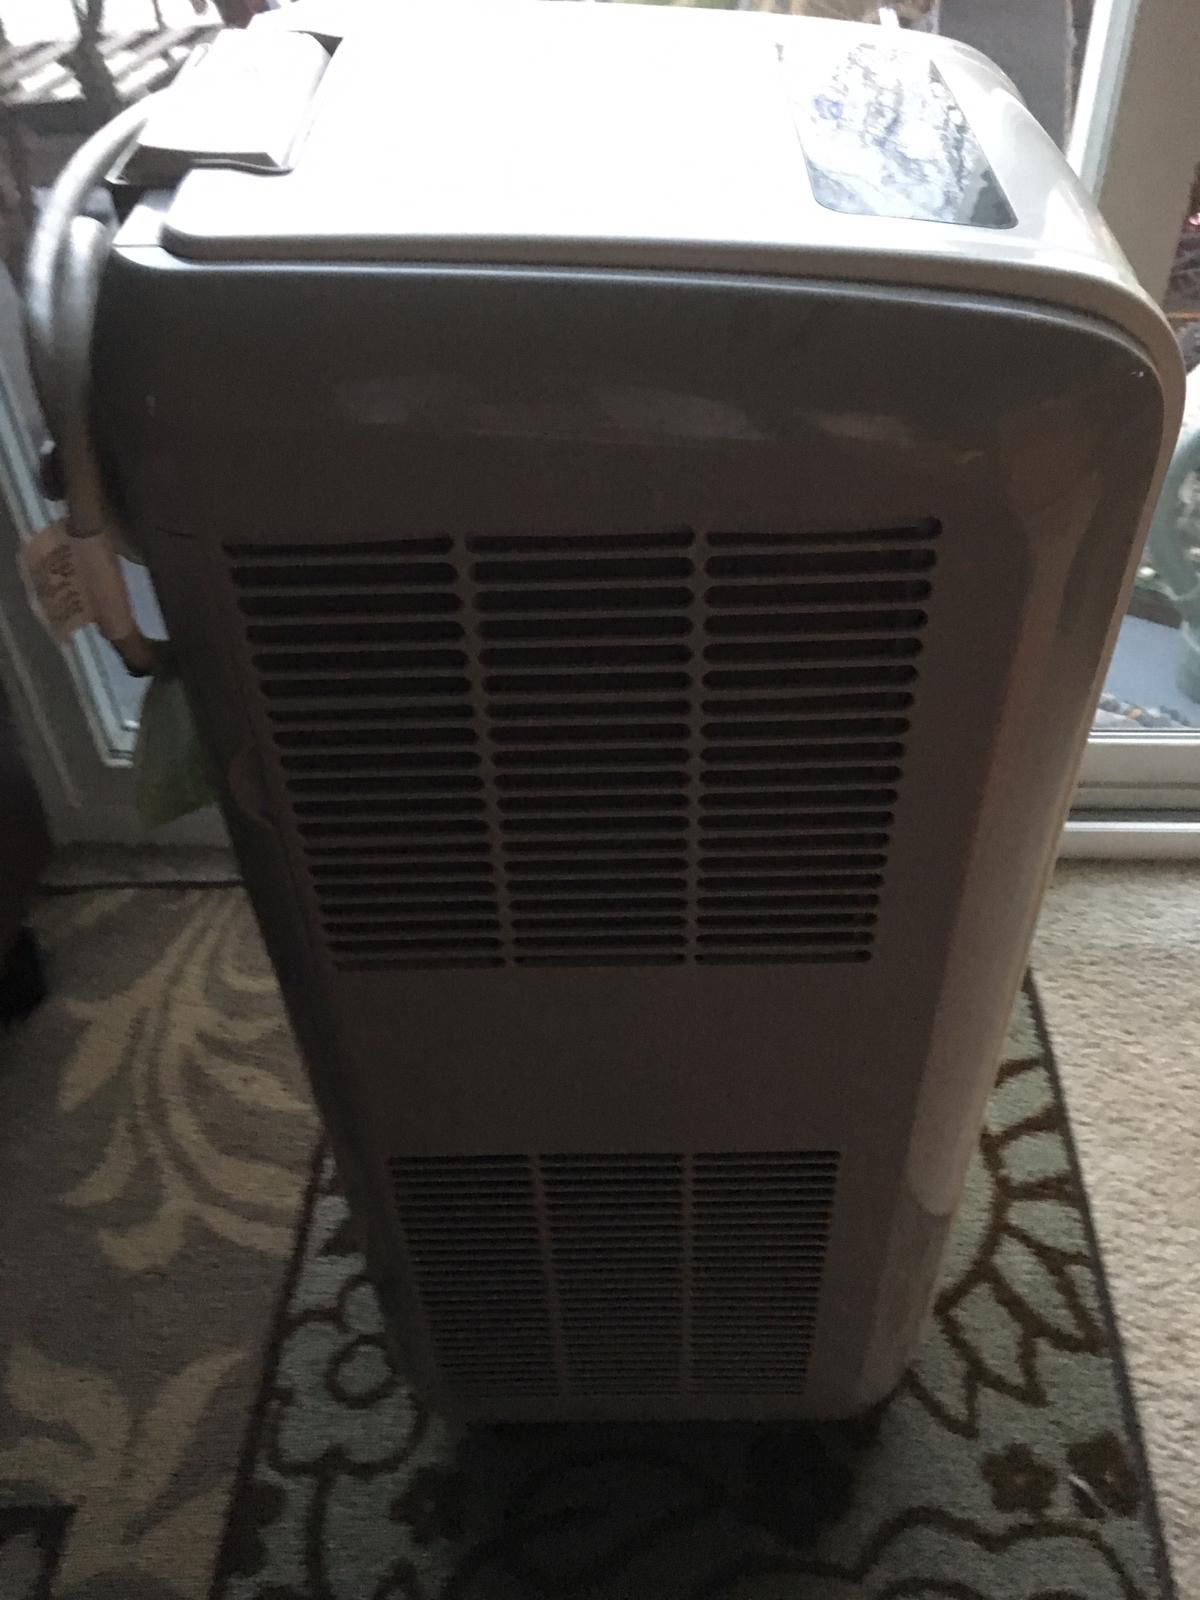 Soleus Air Conditioner and Dehumidifier